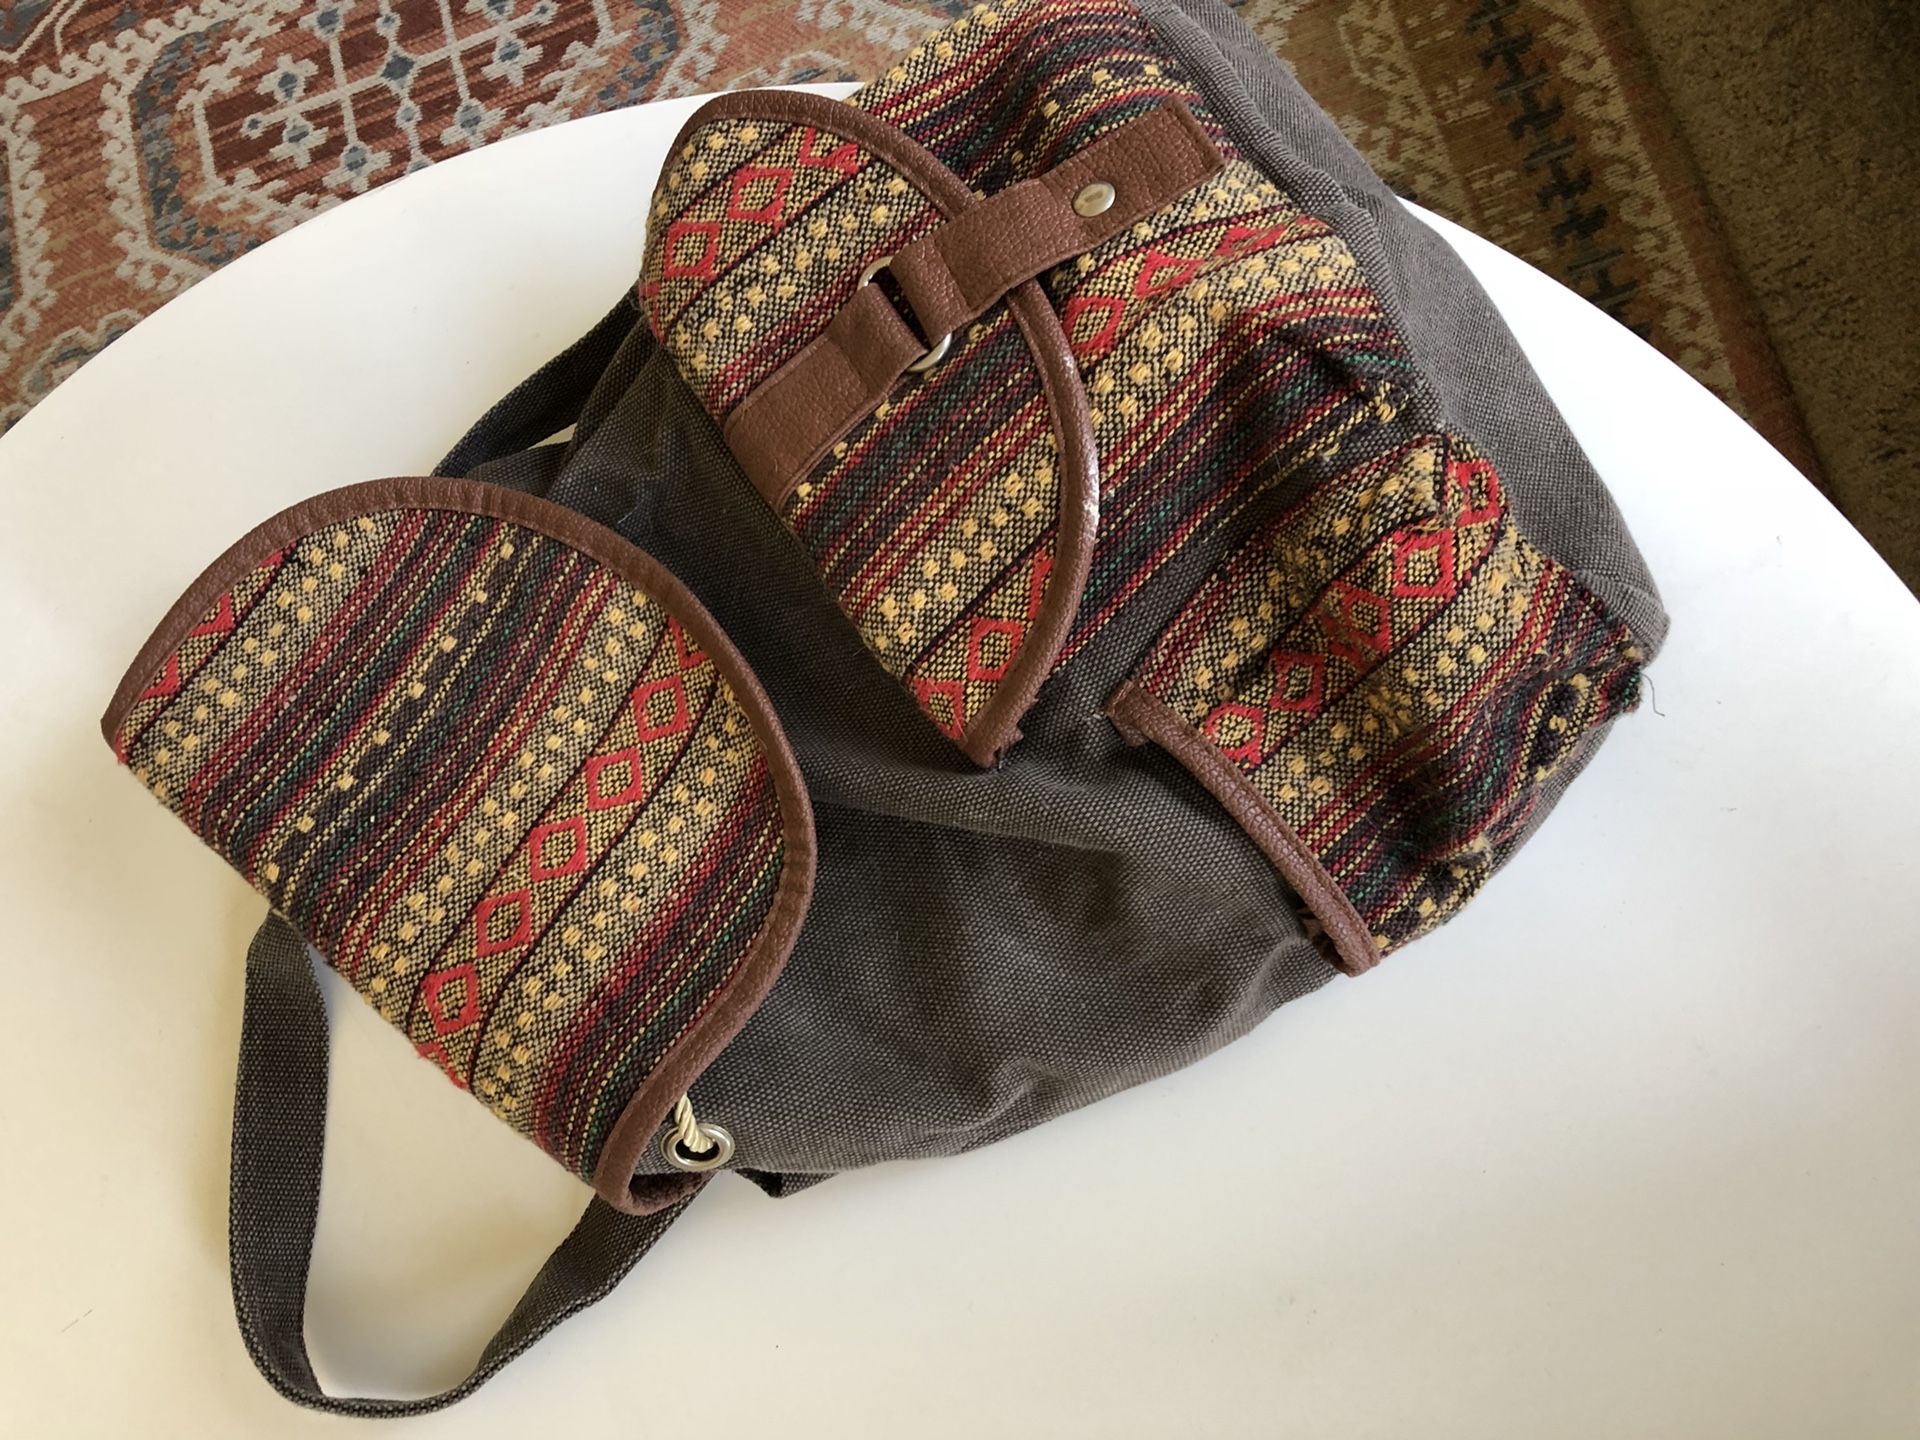 Backpack from Peru